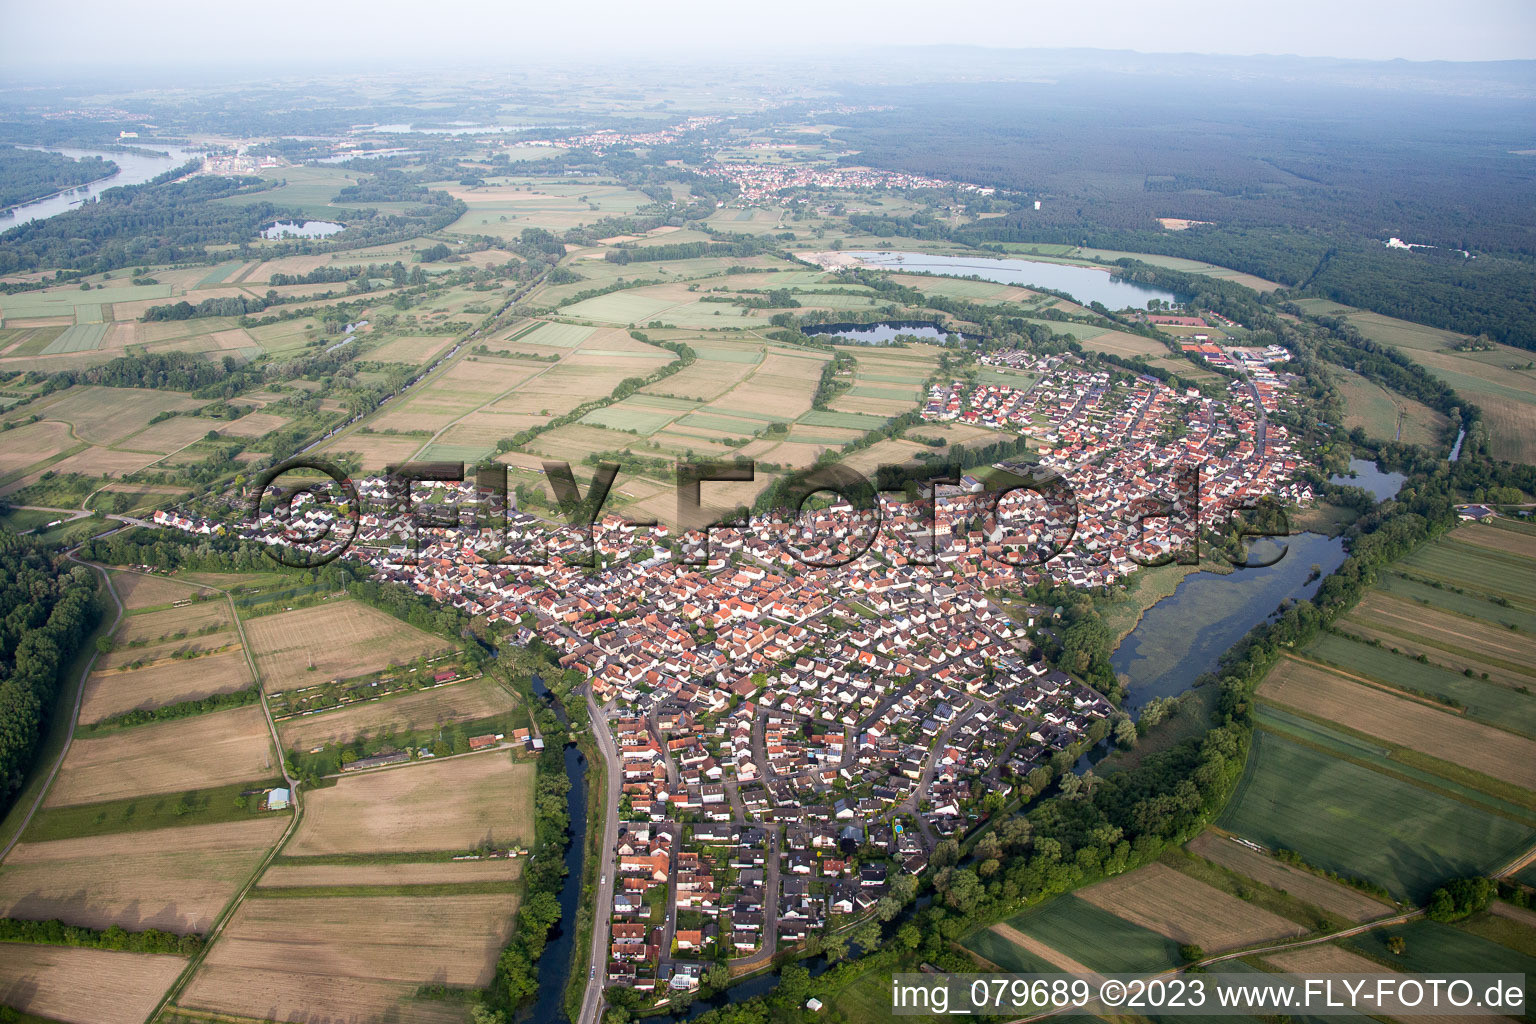 Neuburg in the state Rhineland-Palatinate, Germany from above